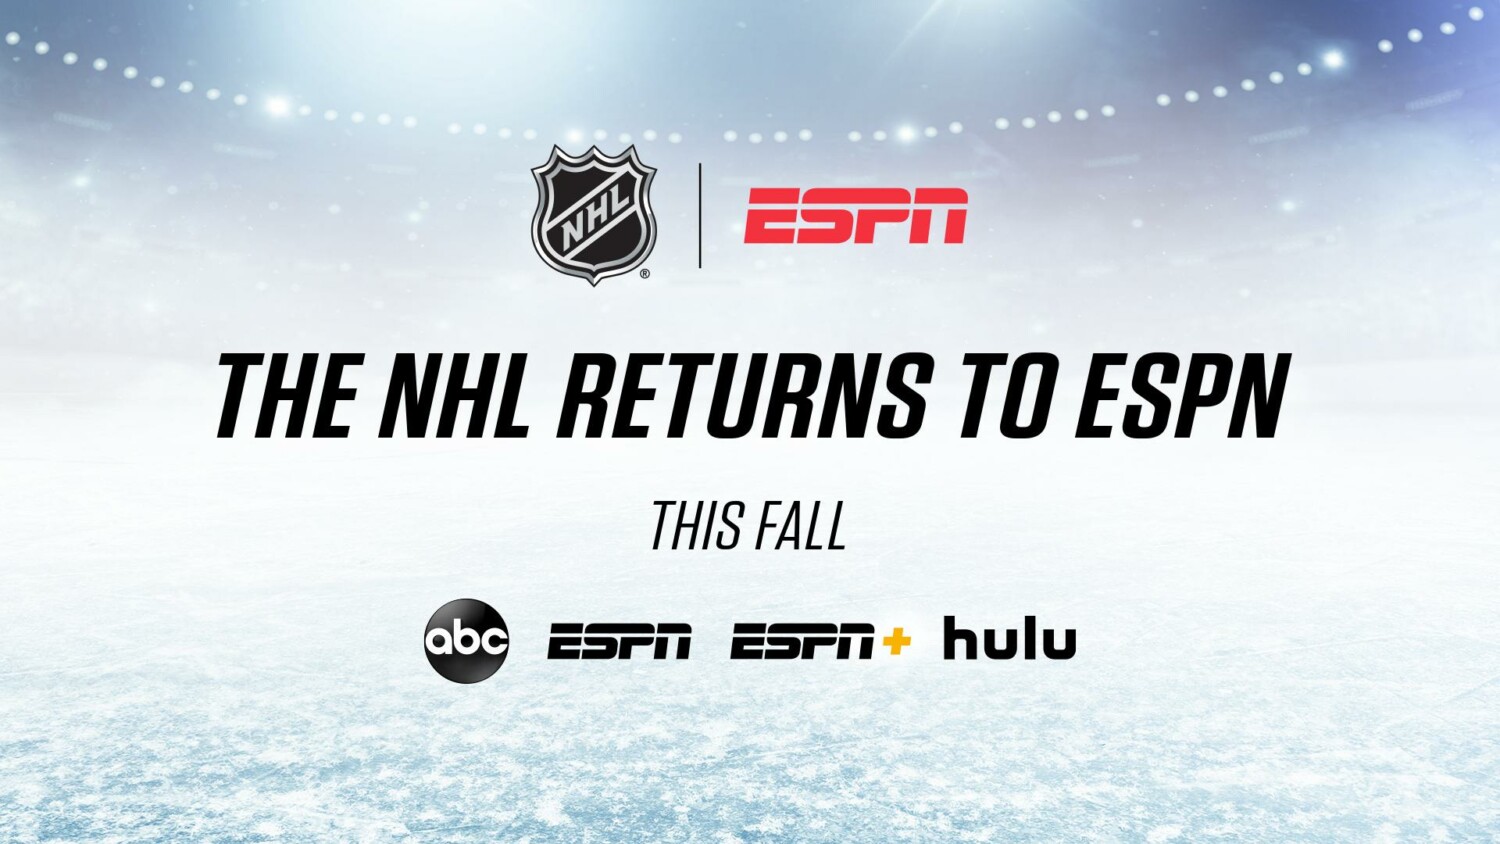 NHL News New ESPN TV Deal To Begin This Season